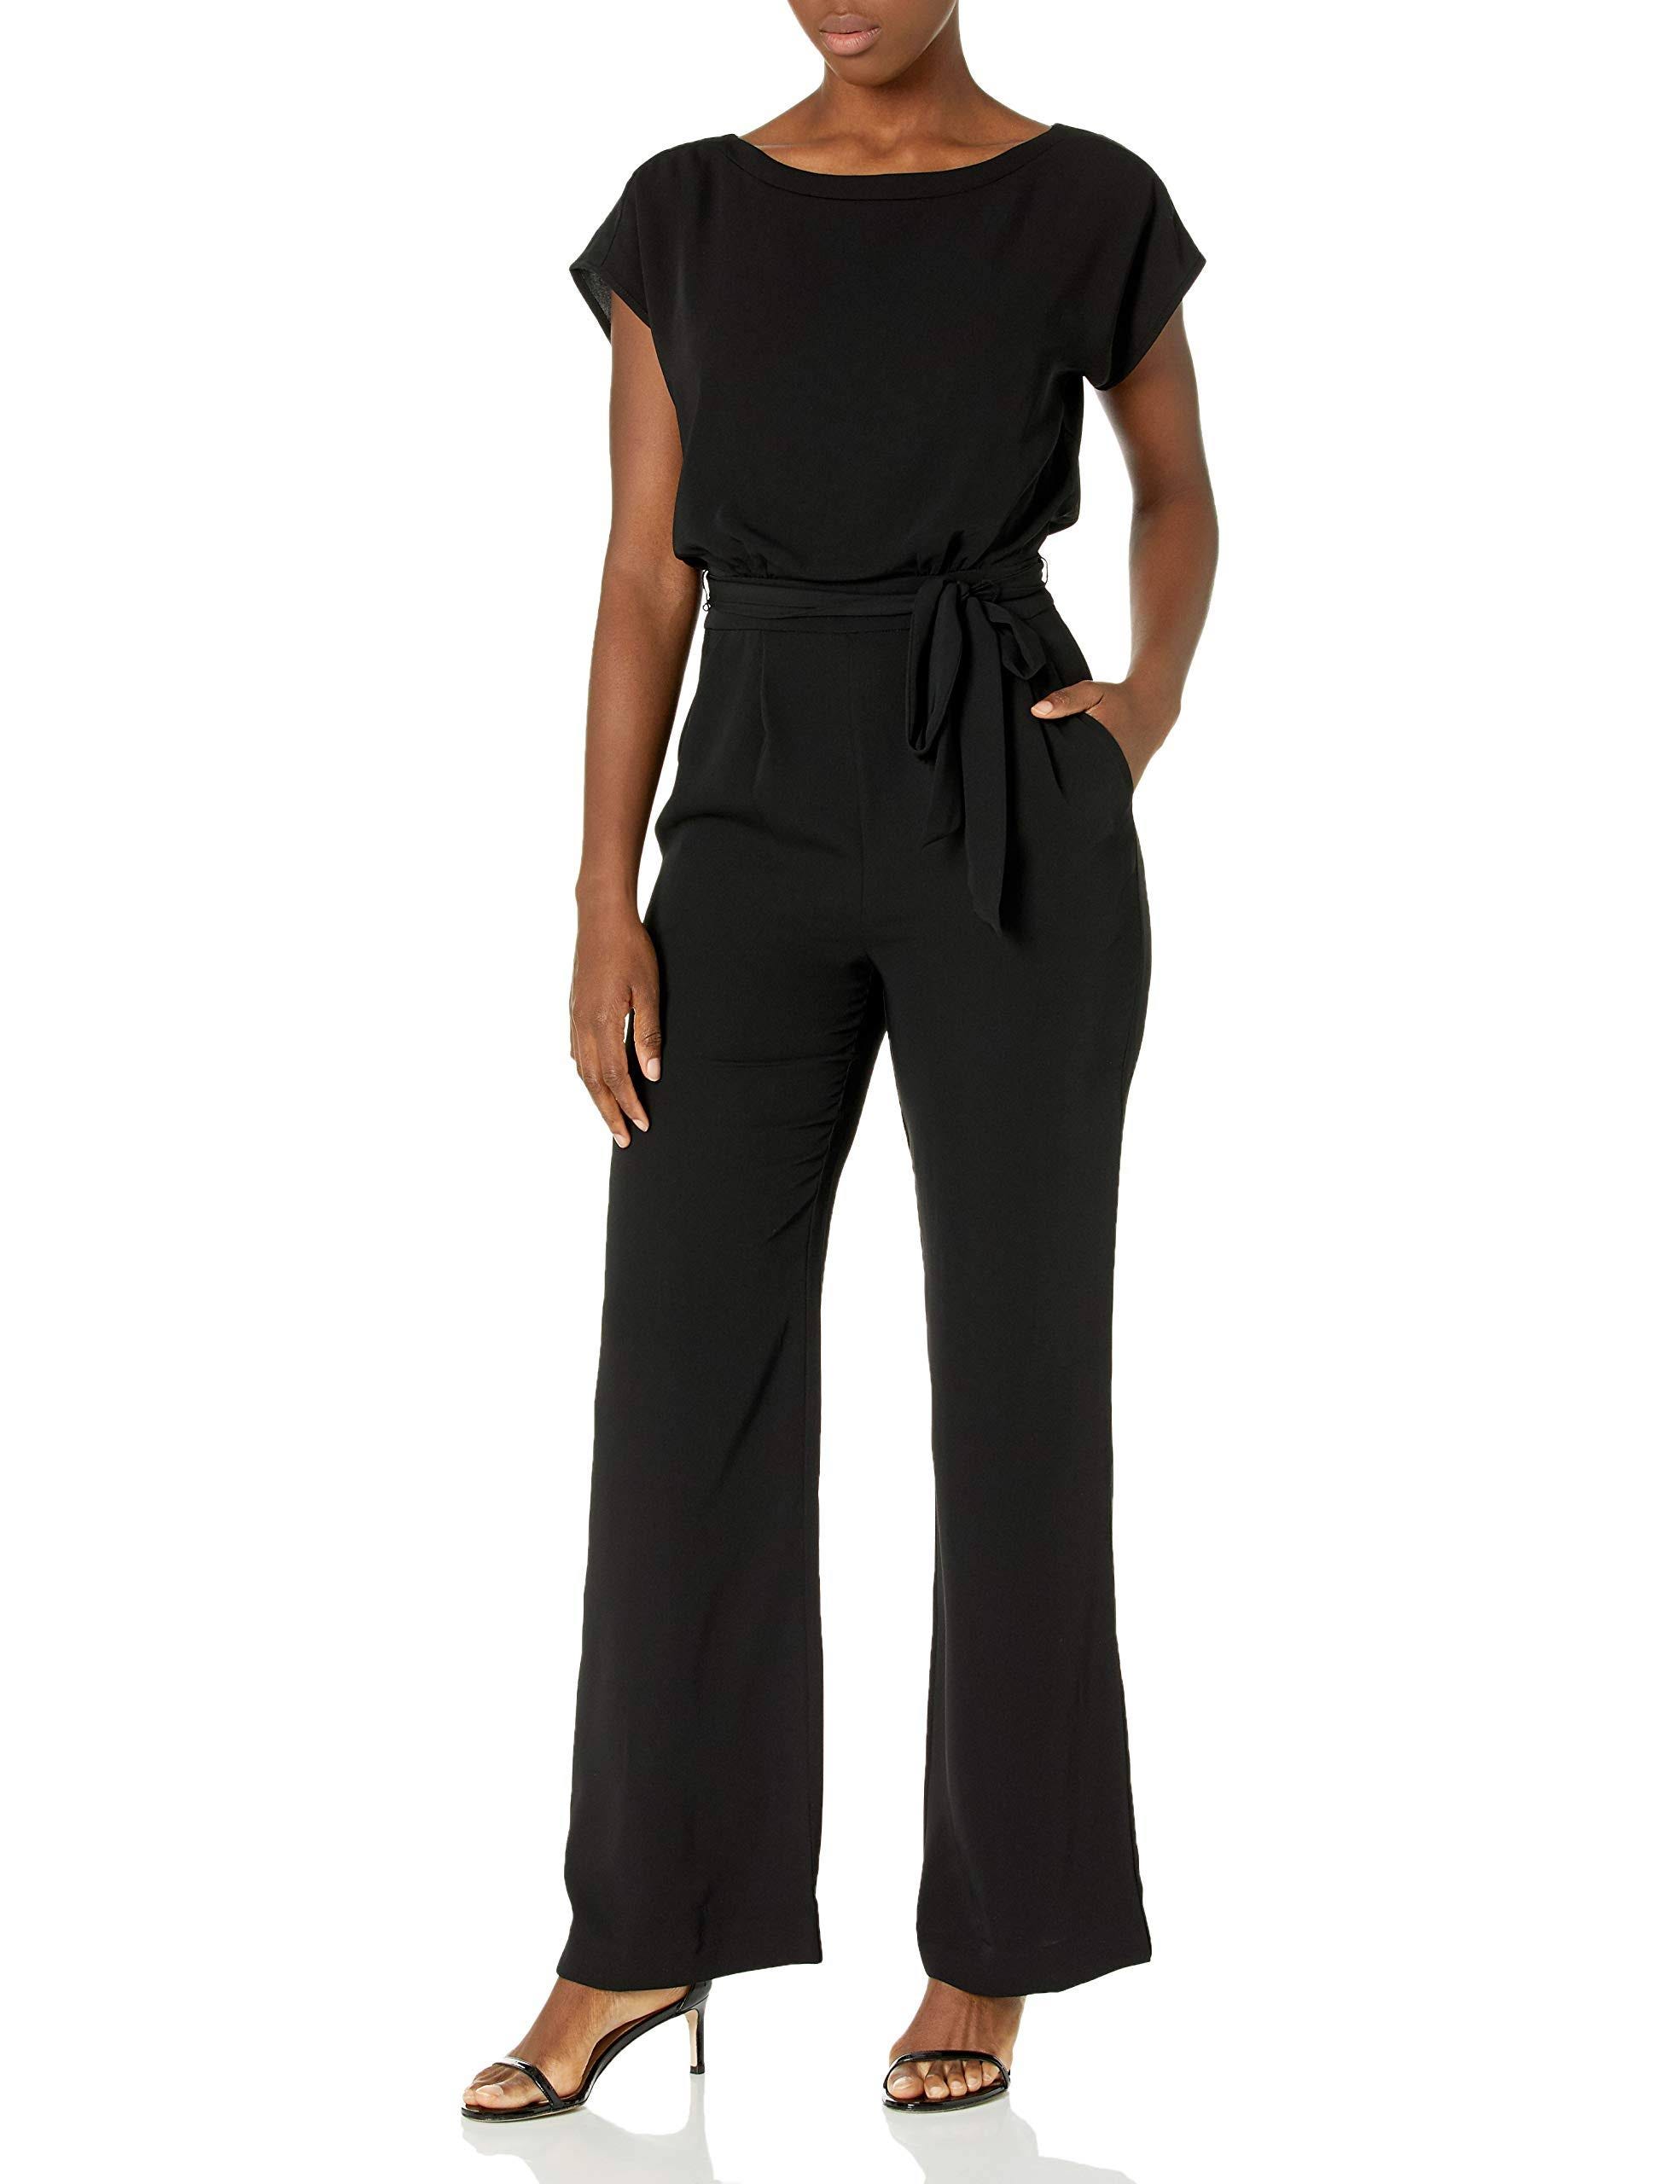 Stylish Black Cap Sleeve Wide Leg Jumpsuit | Image